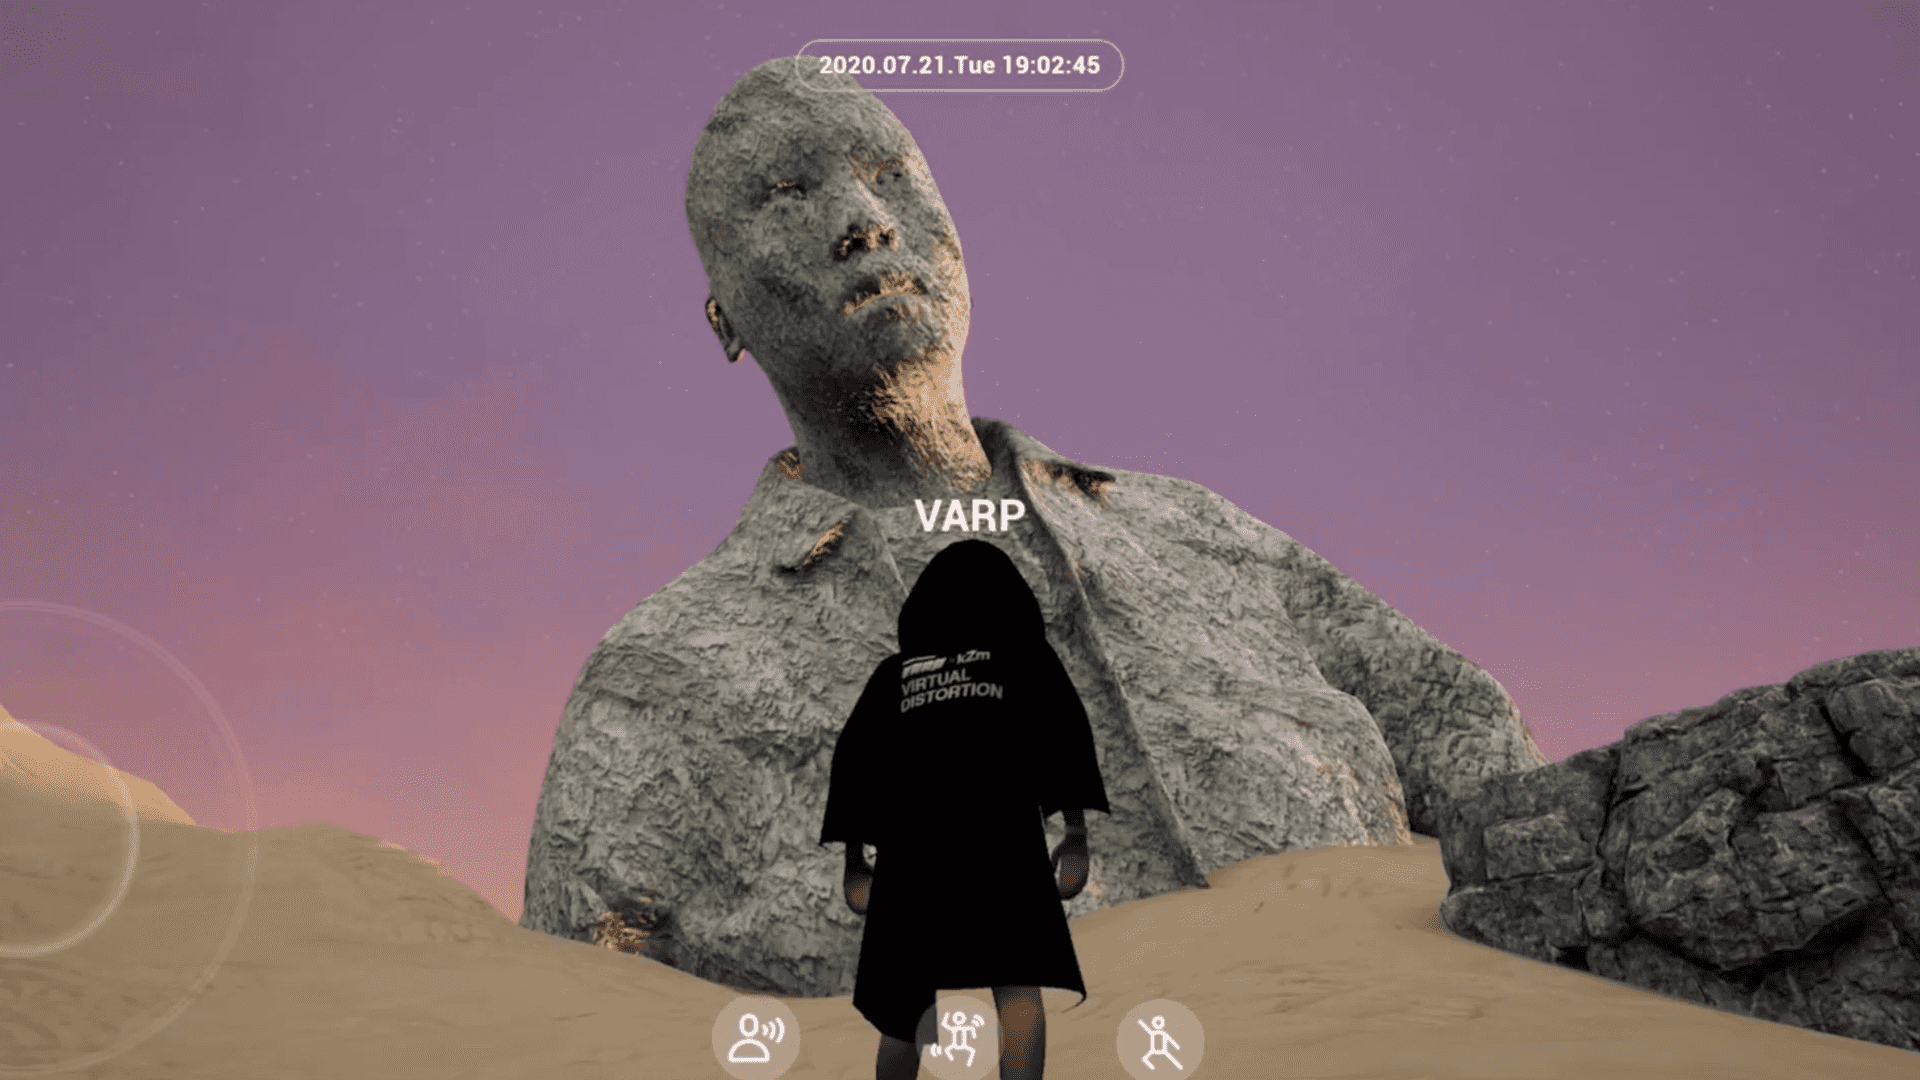 VARP x kZm “VIRTUAL DISTORTION”'s image